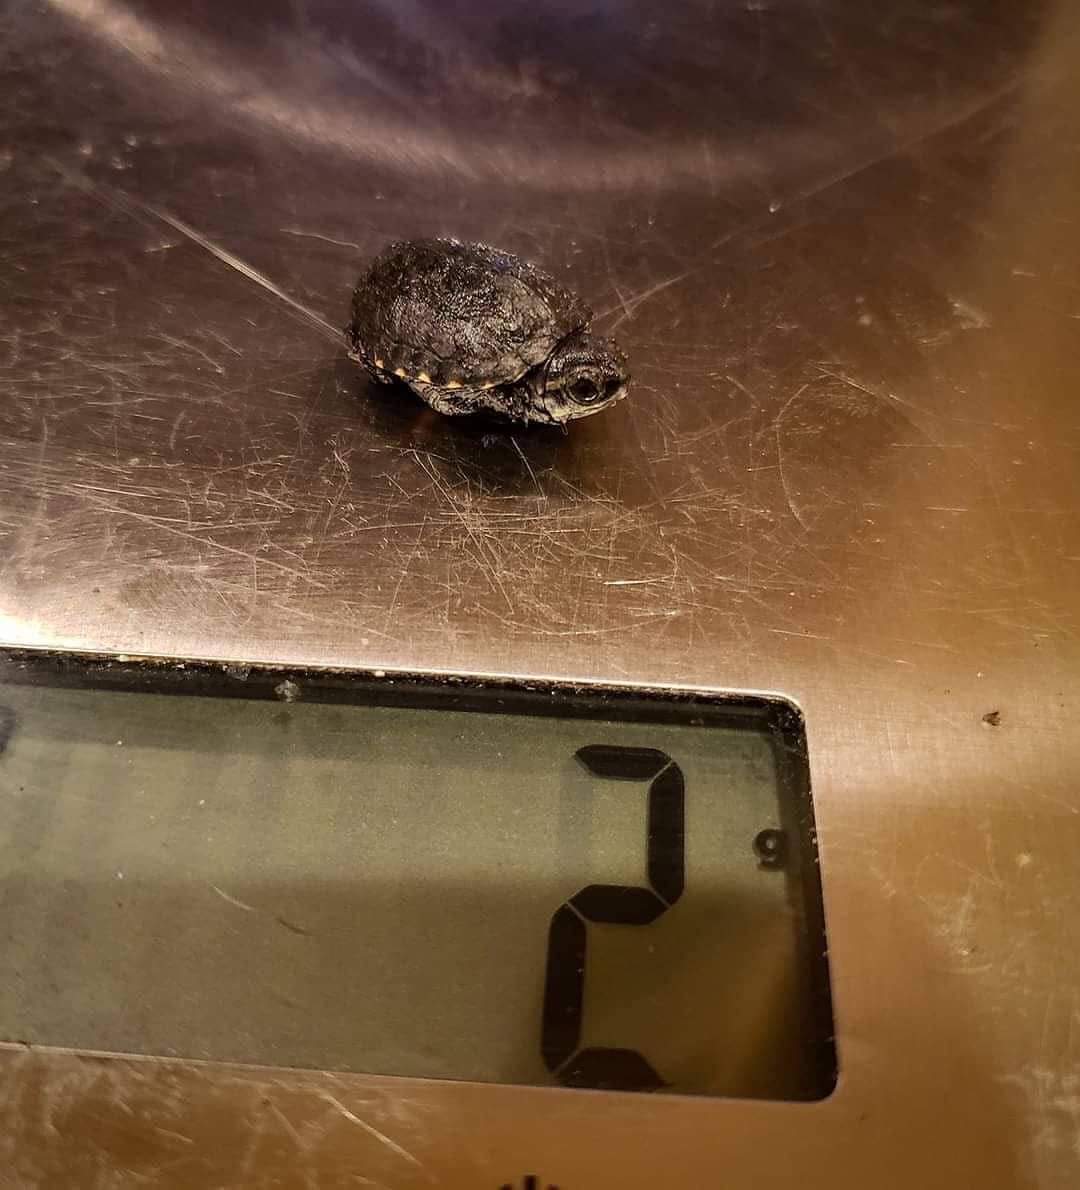 2 grams of turtle power!